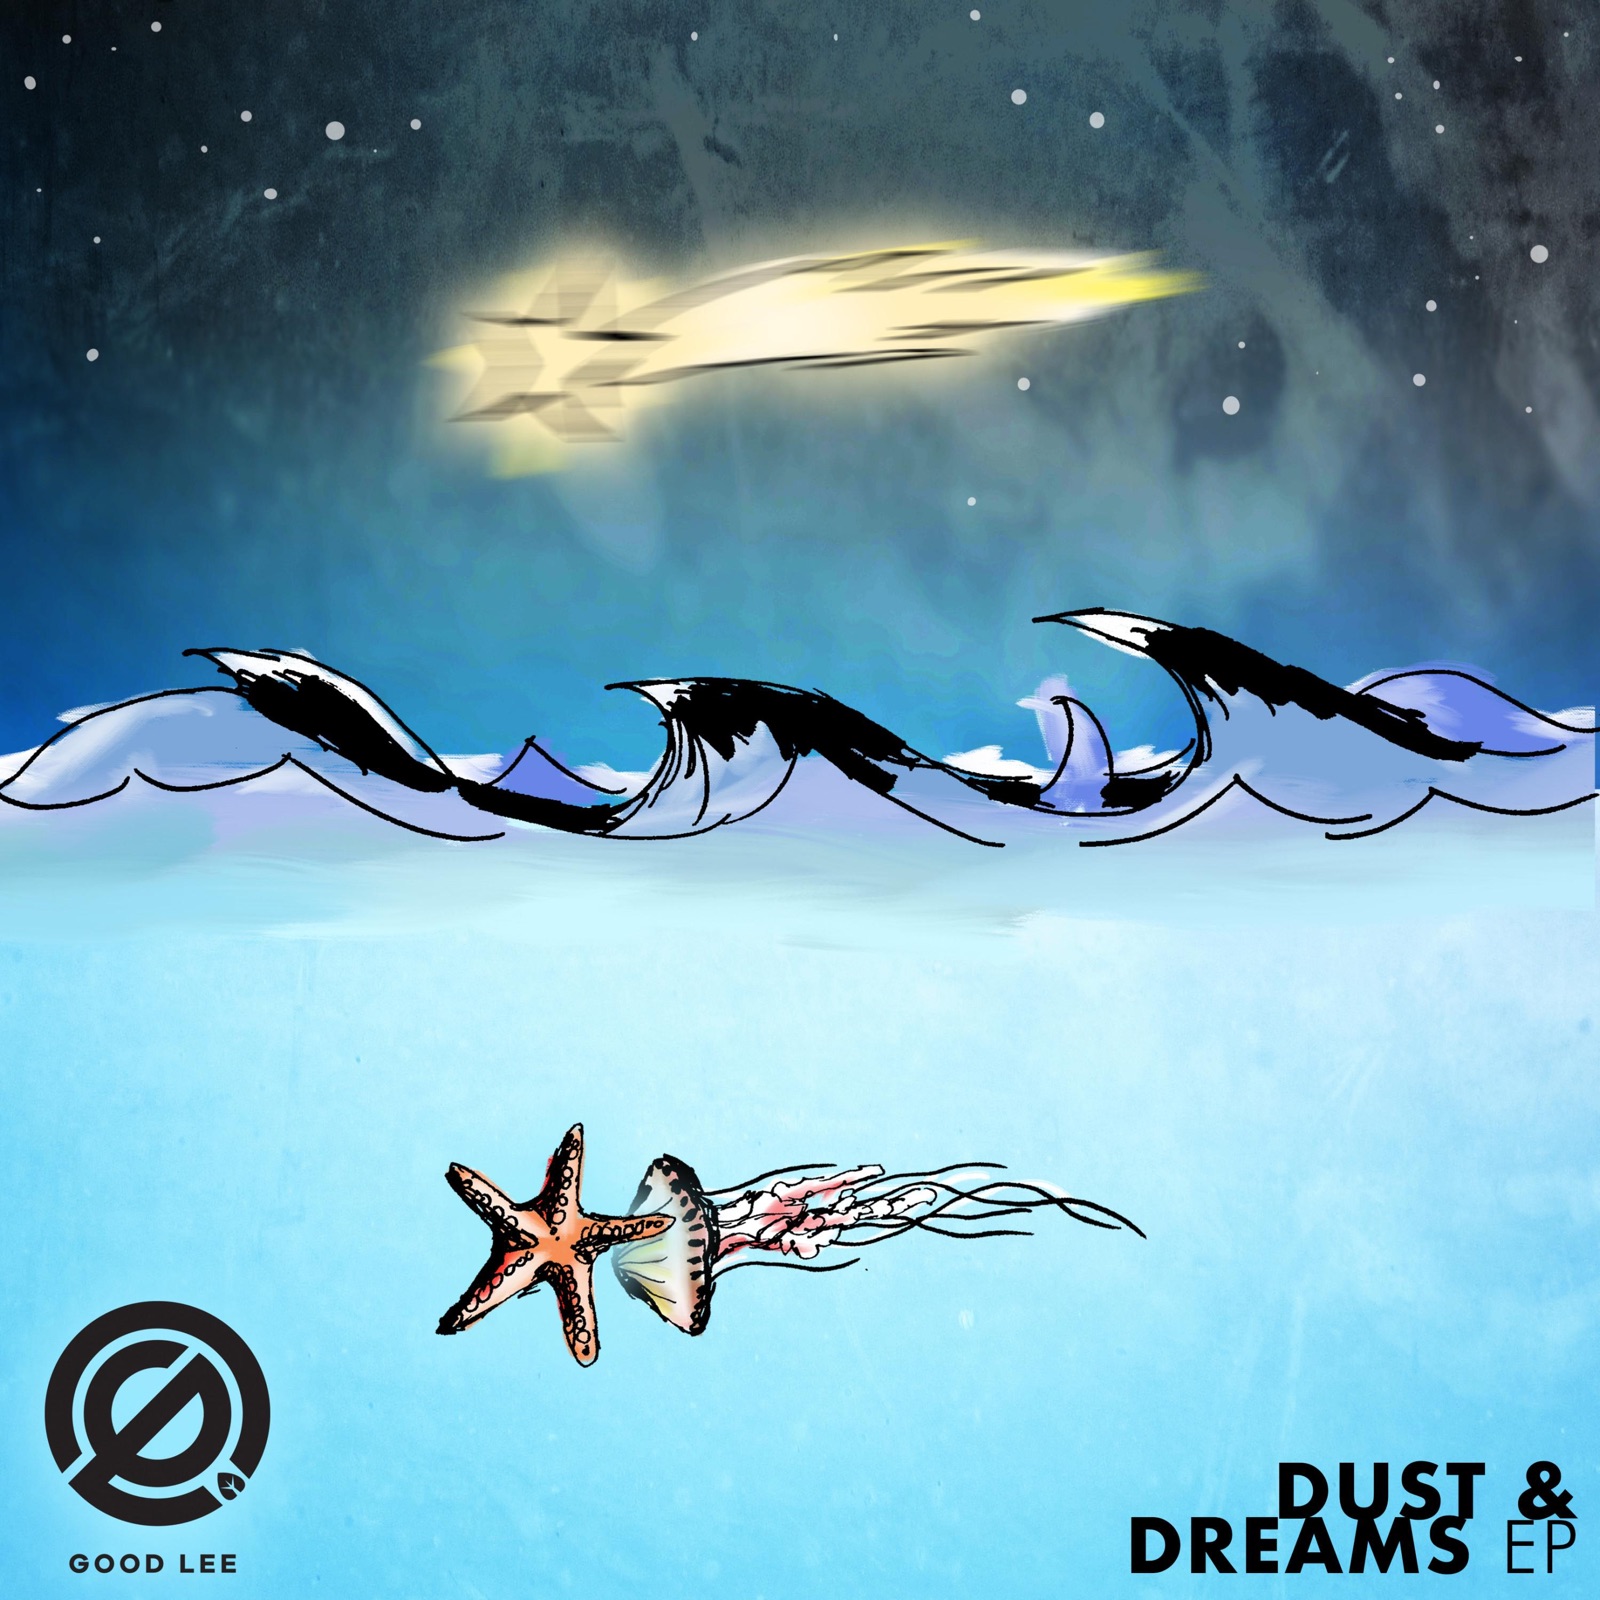 Dust & Dreams EP